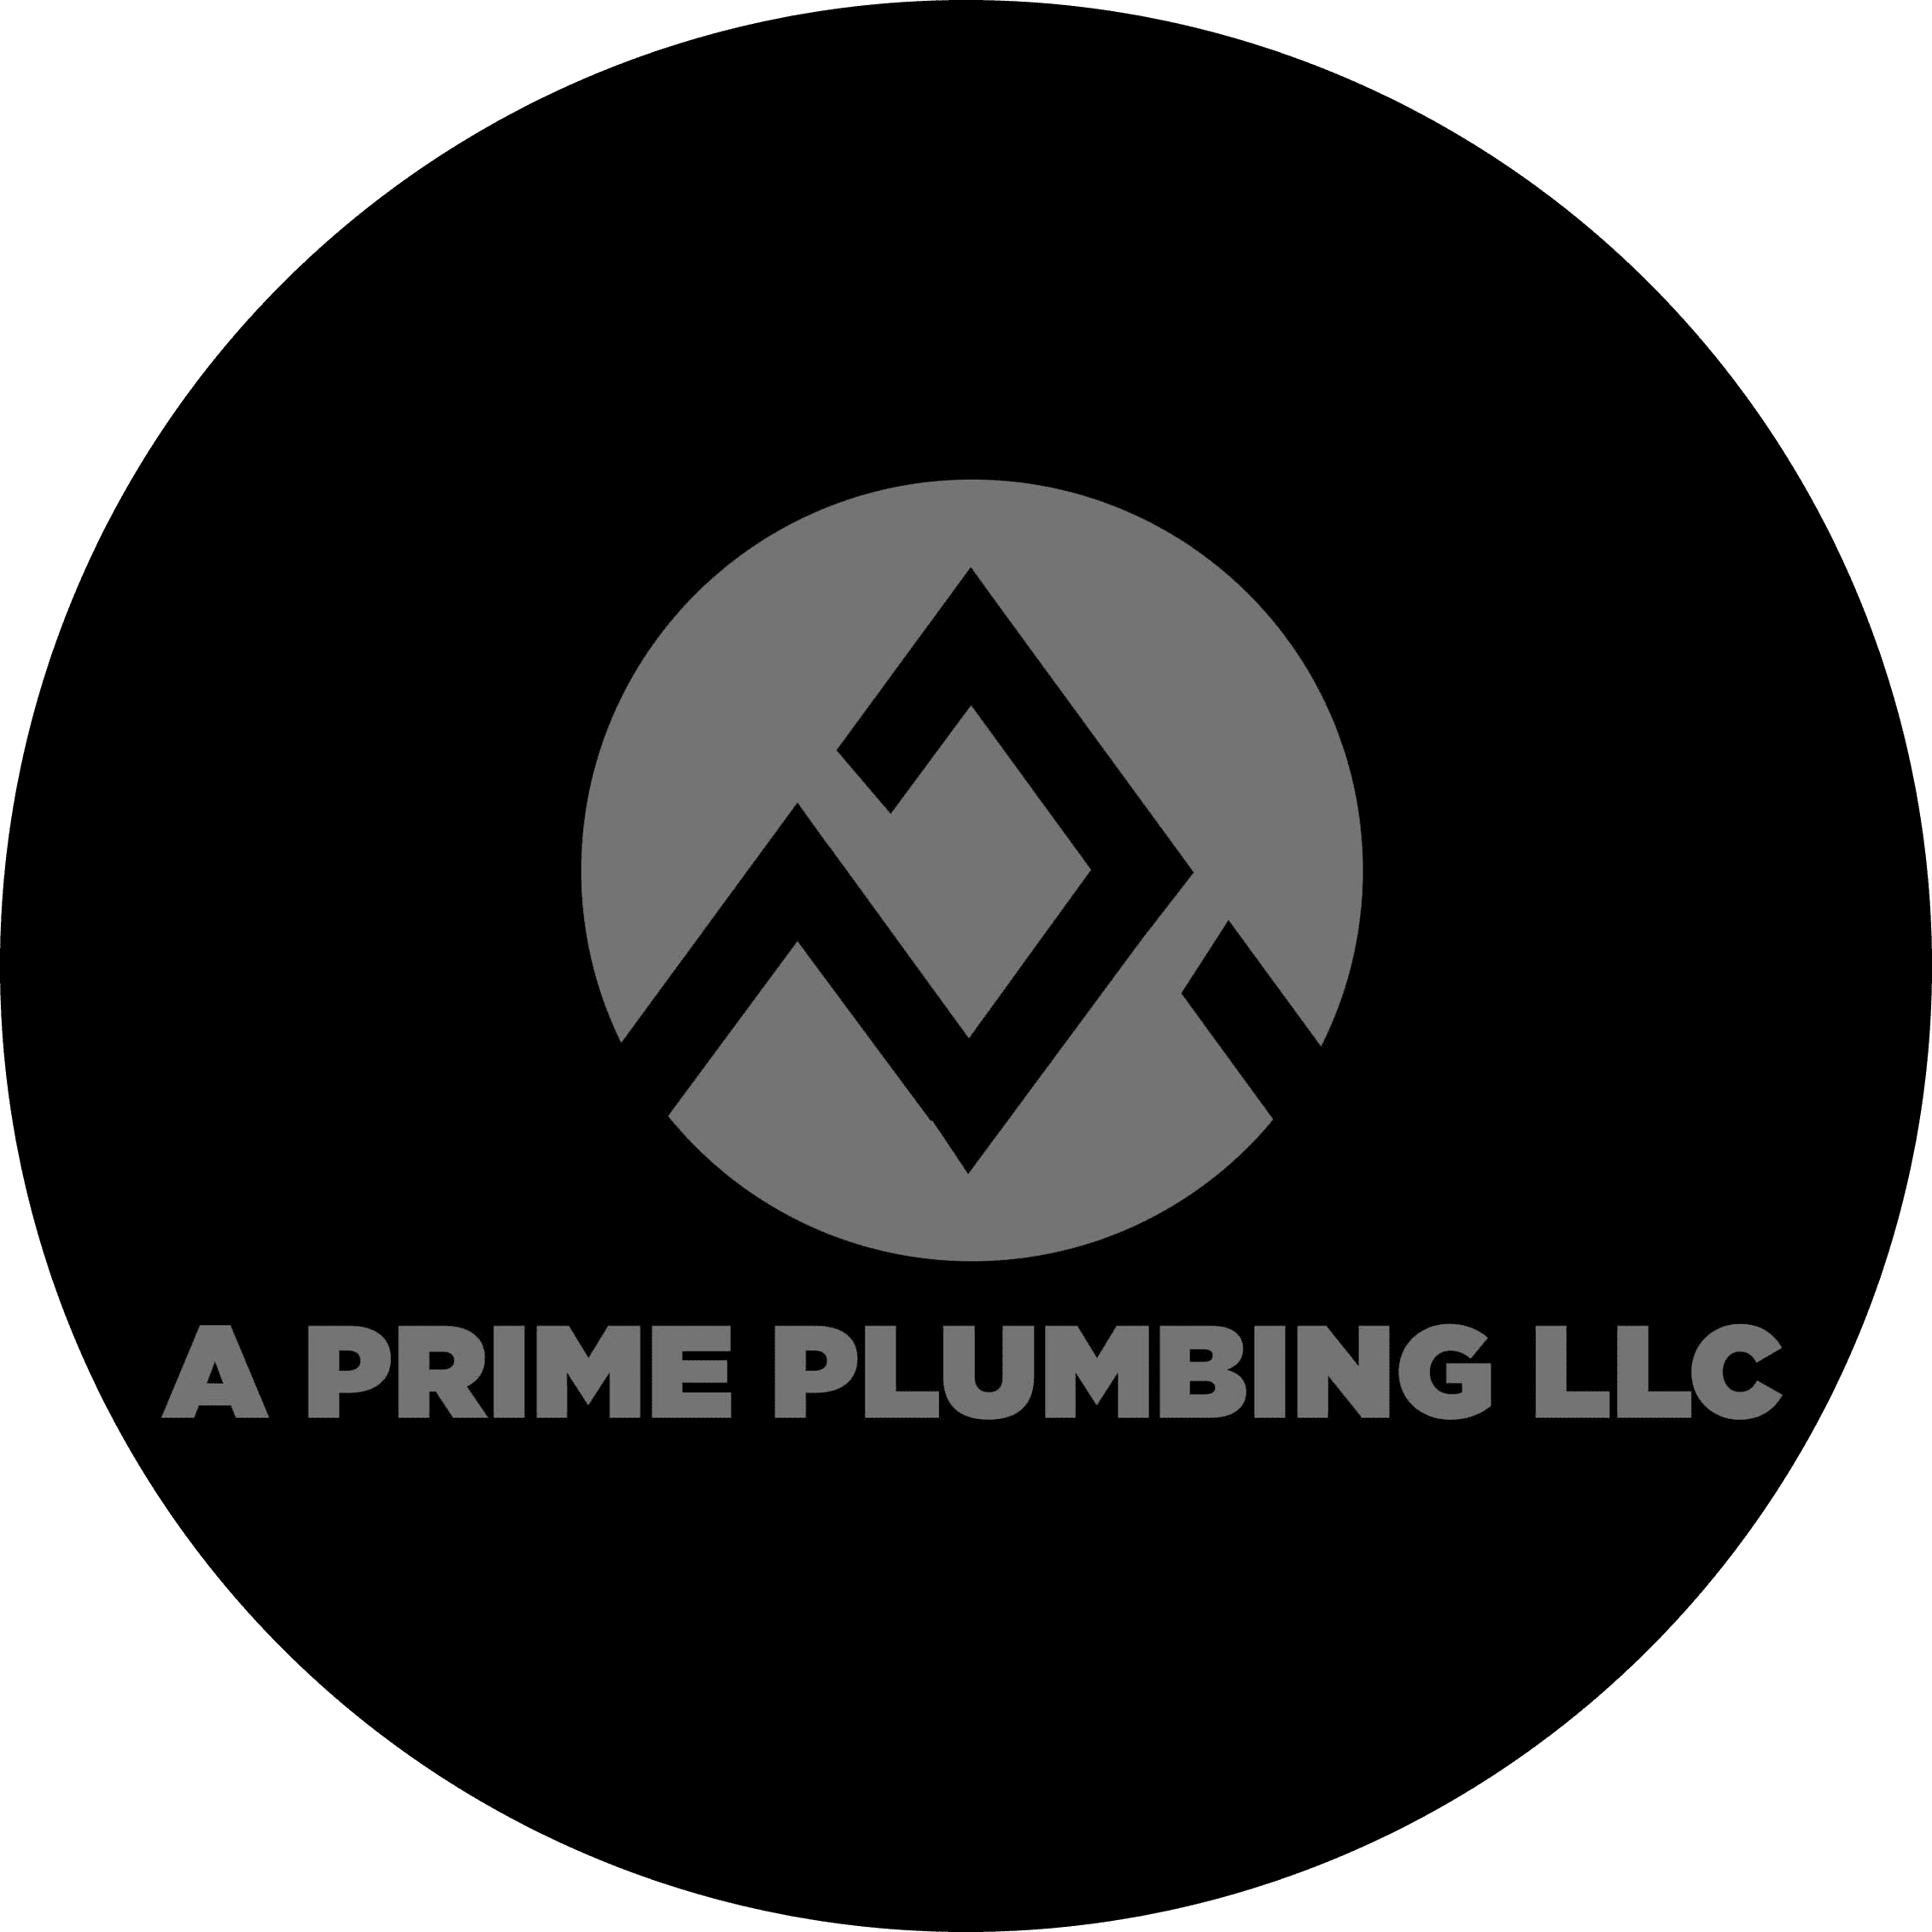 A Prime Plumbing LLC